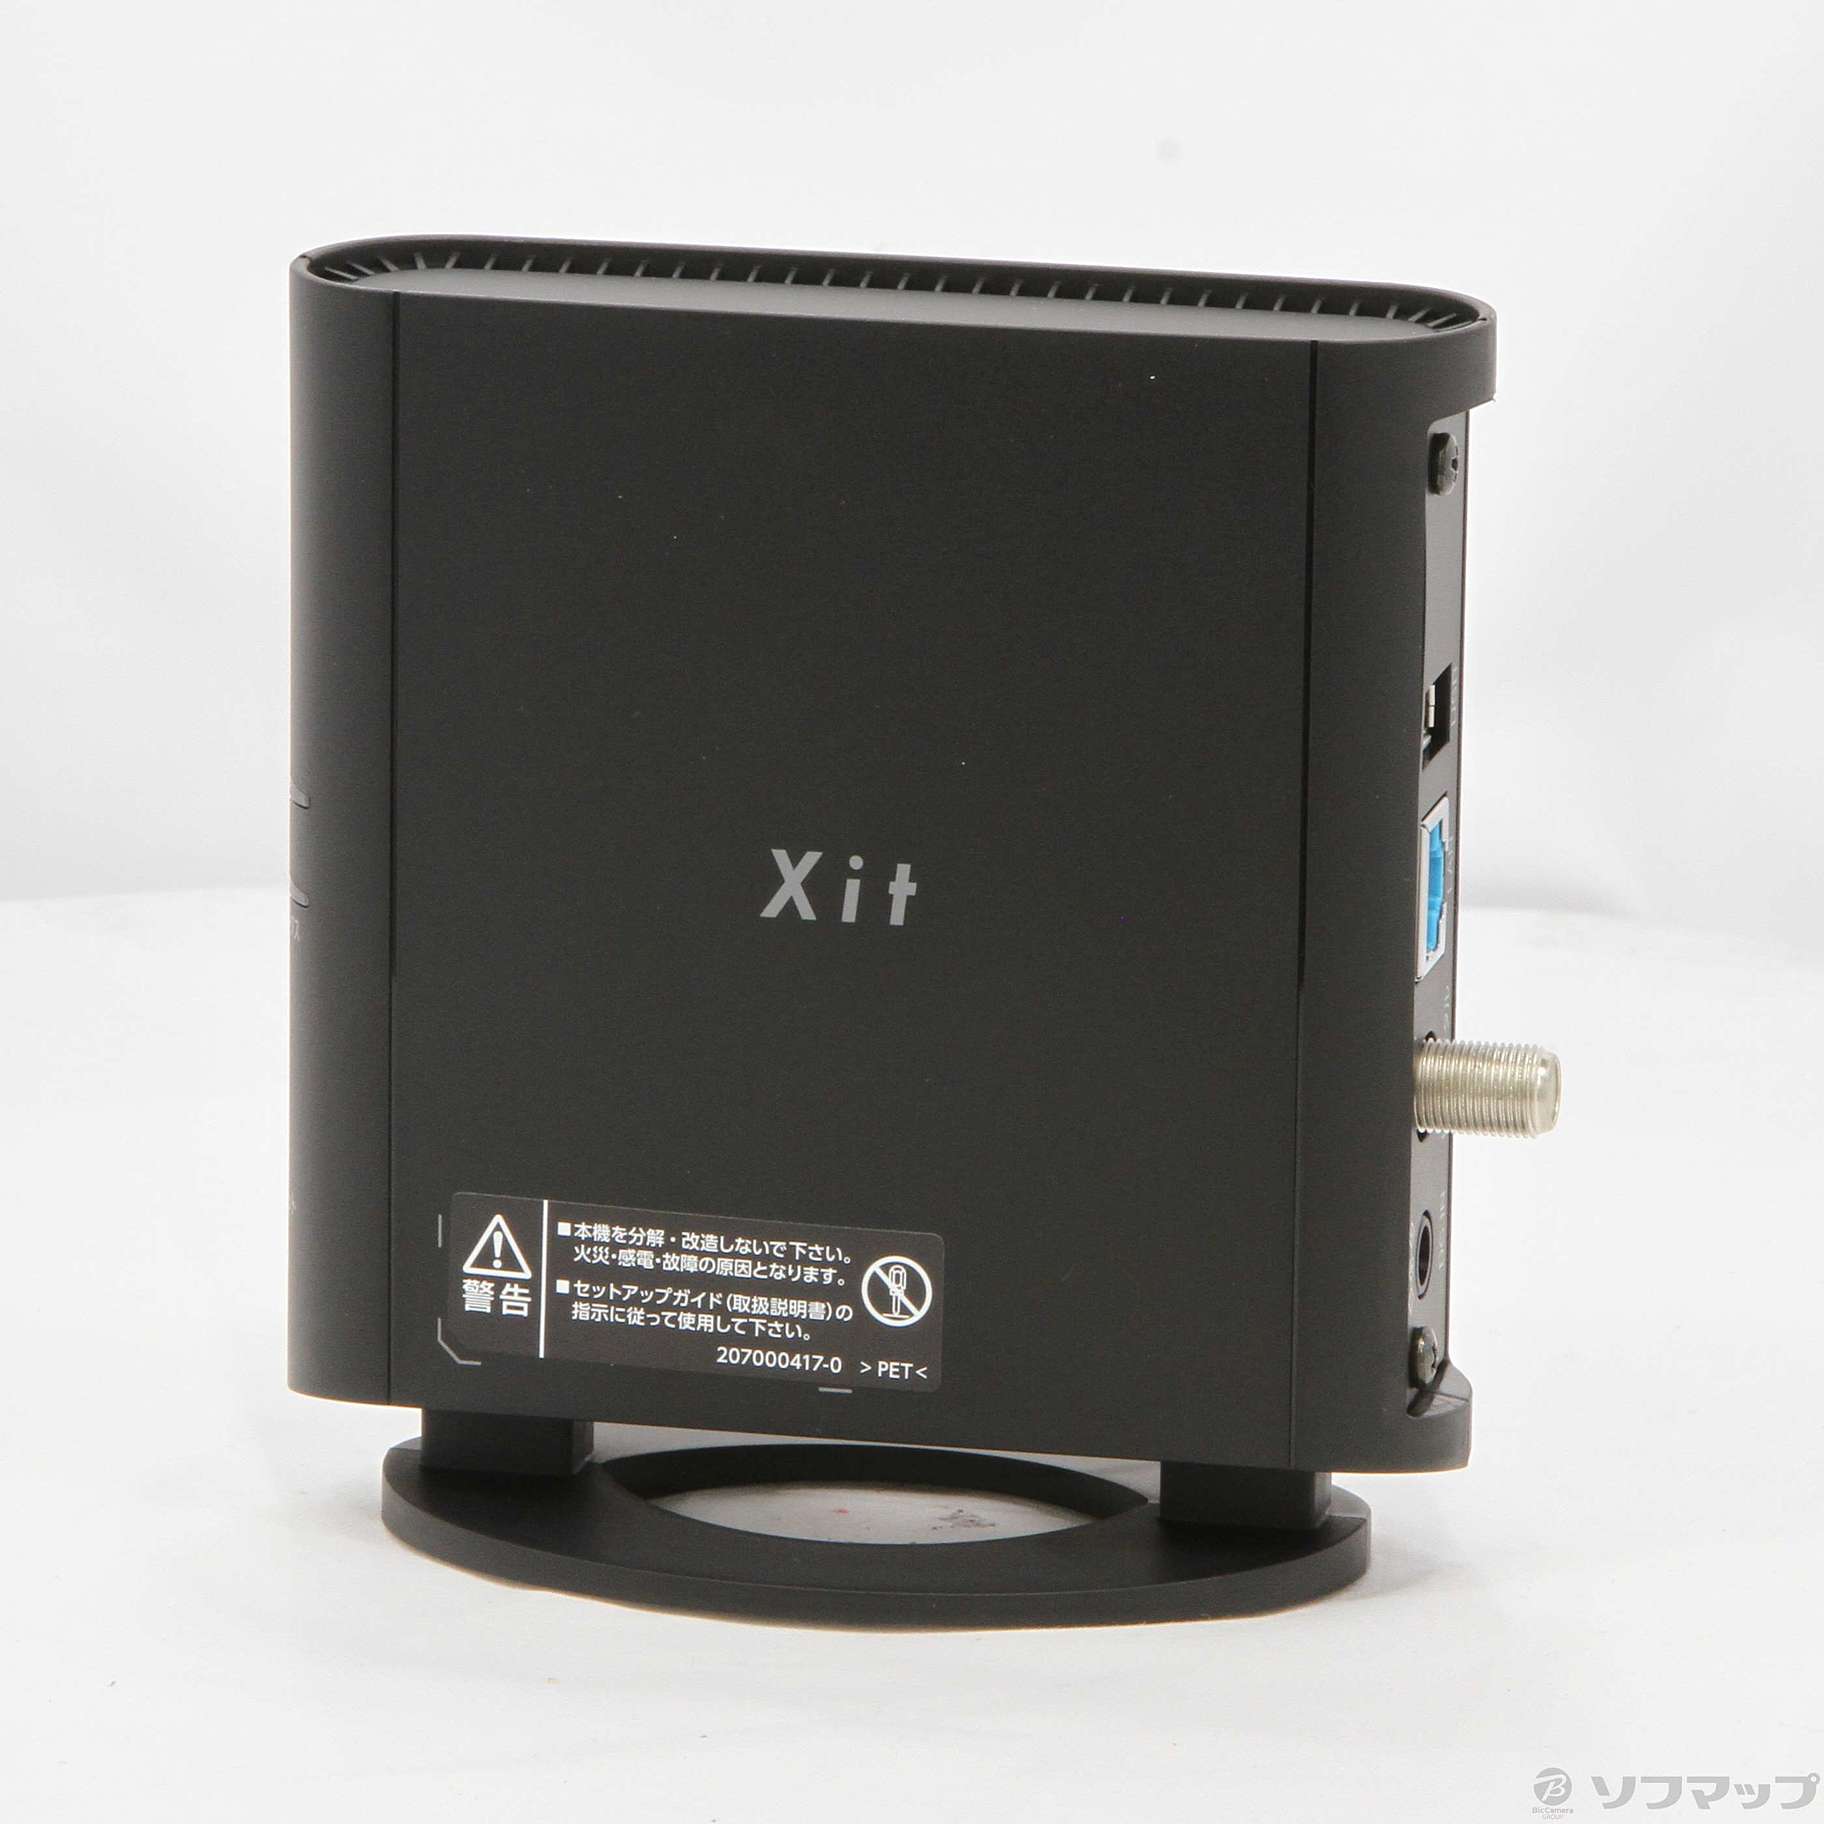 Xit AirBox lite XIT-AIR50